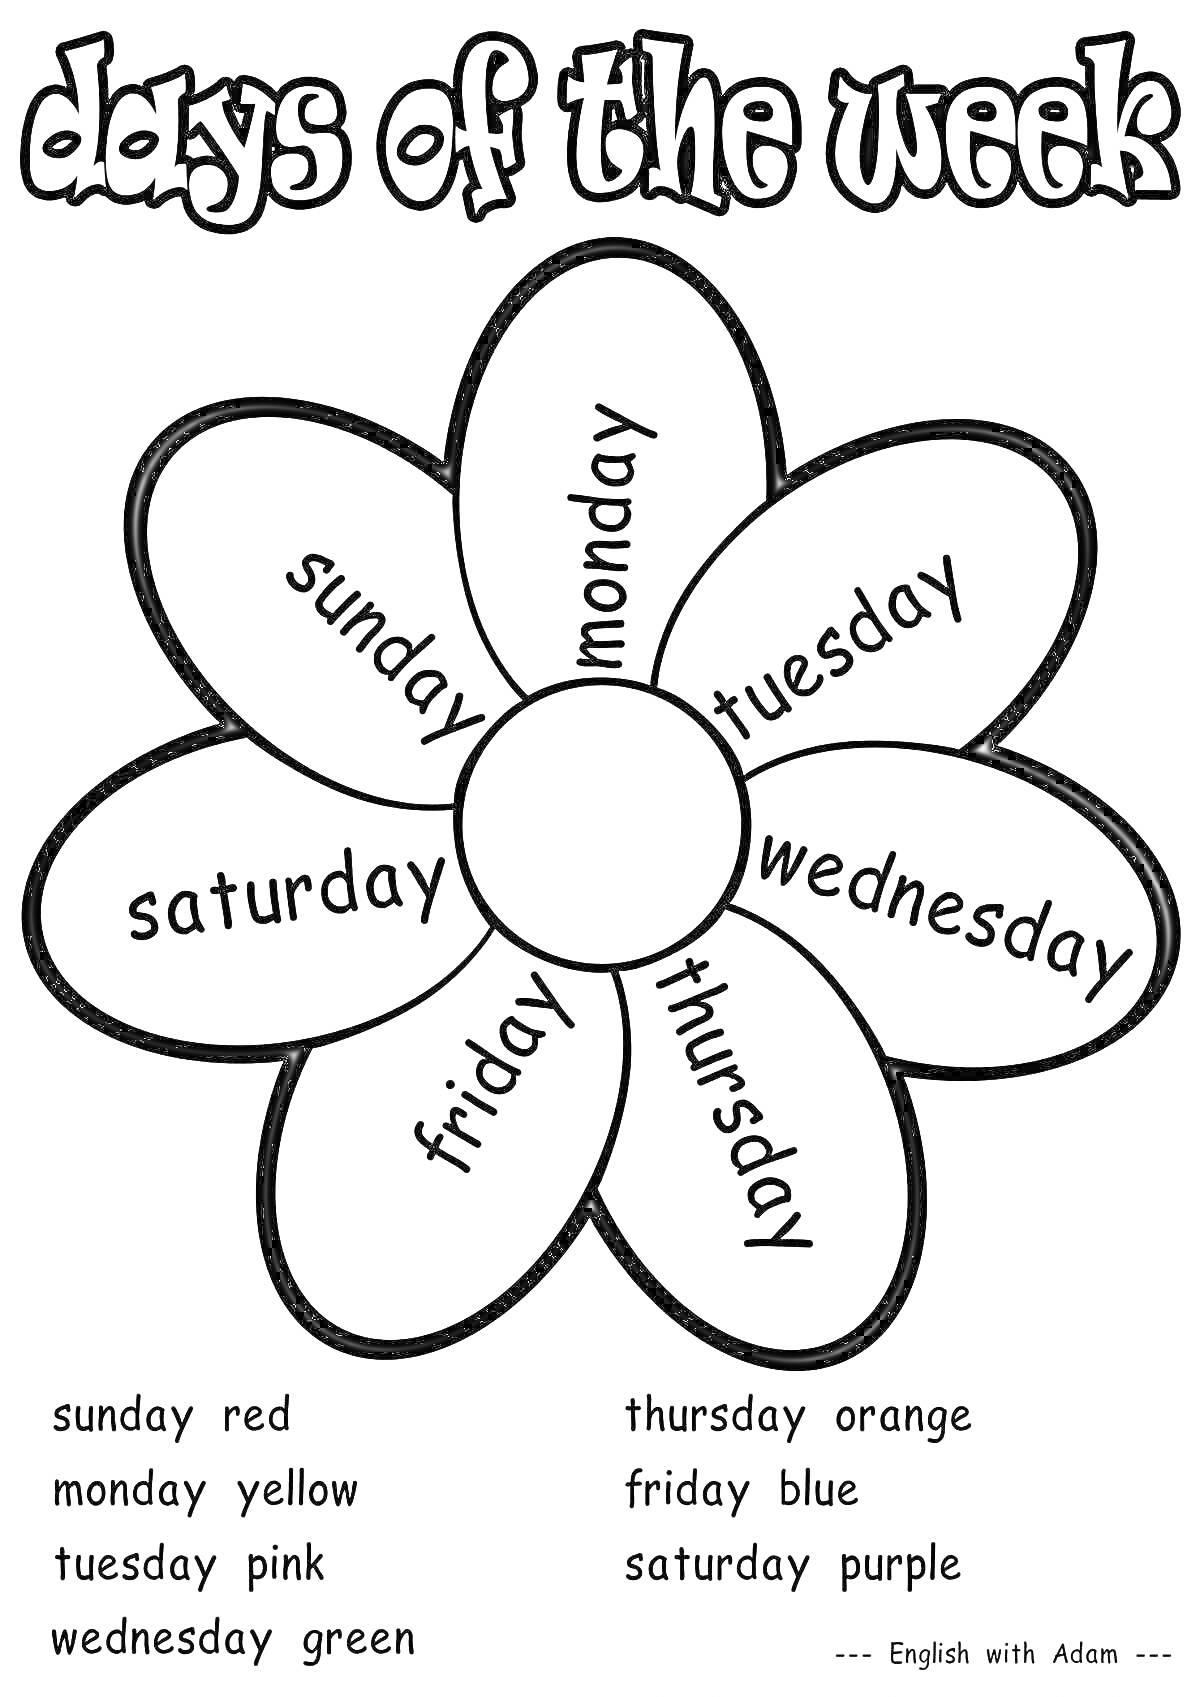 Дни недели цветок (Sunday red, Monday yellow, Tuesday pink, Wednesday green, Thursday orange, Friday blue, Saturday purple)